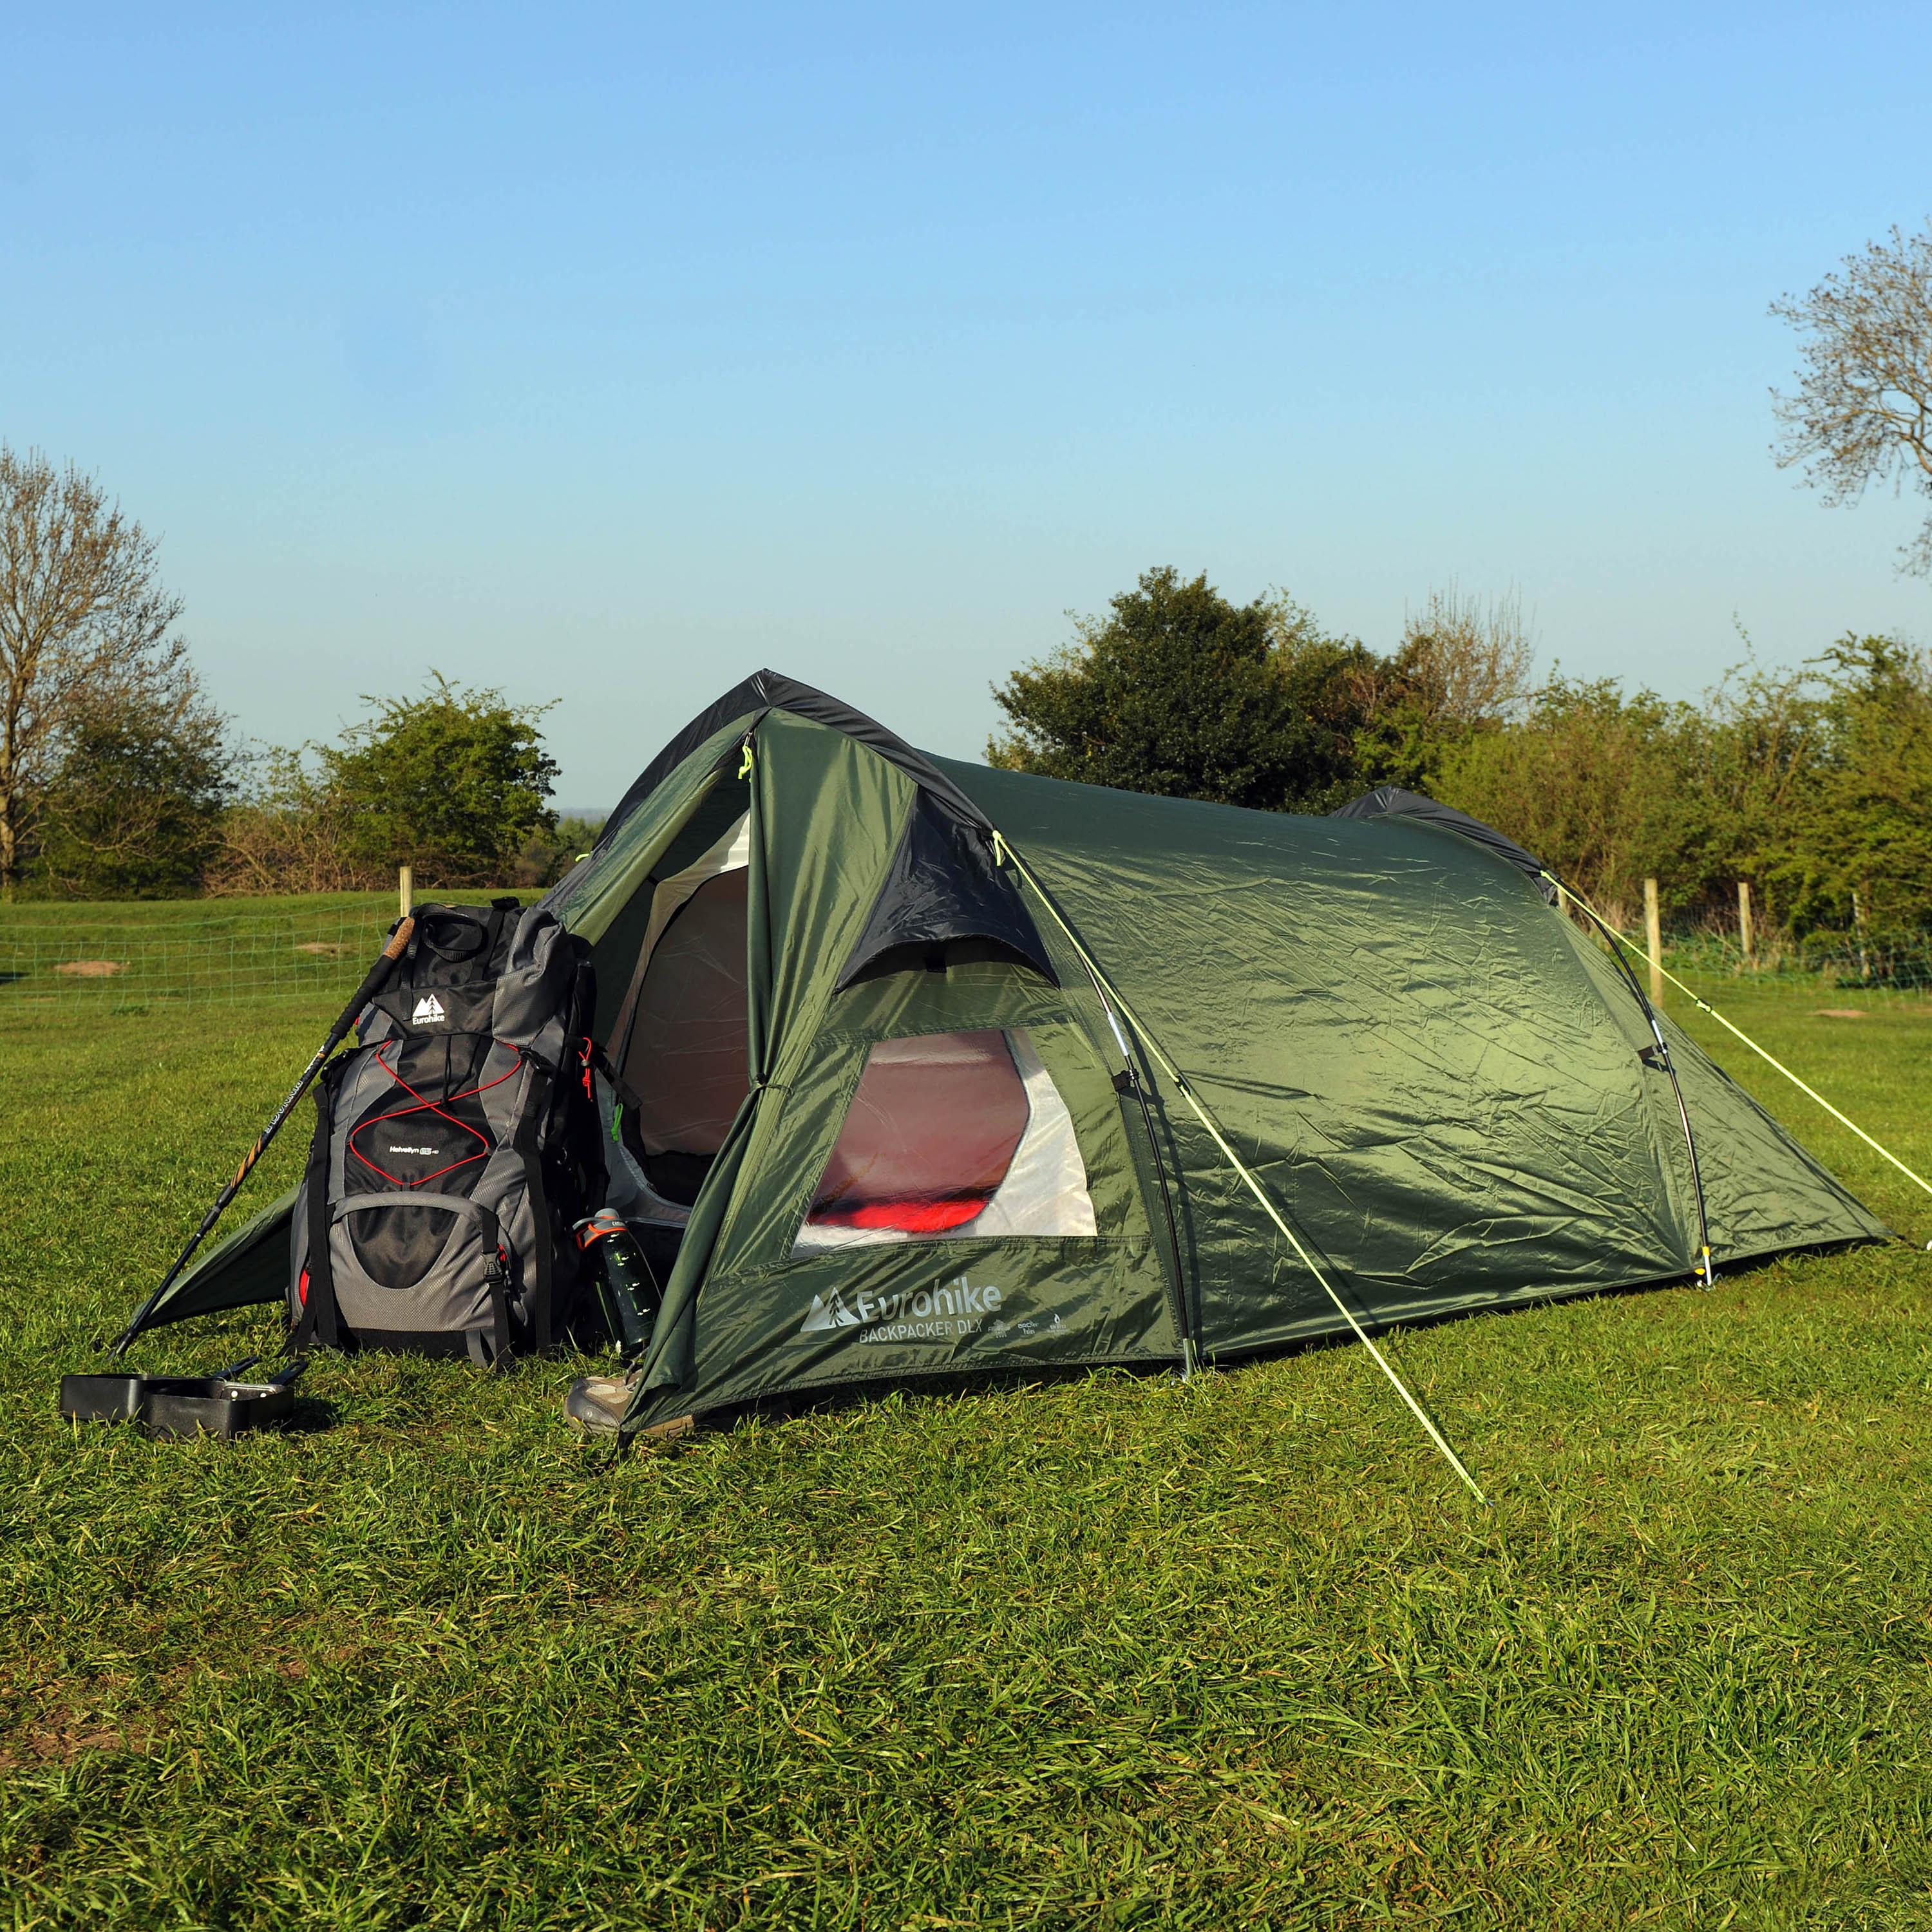 New Eurohike Backpacker Deluxe Festival Tent Camping Gear Green